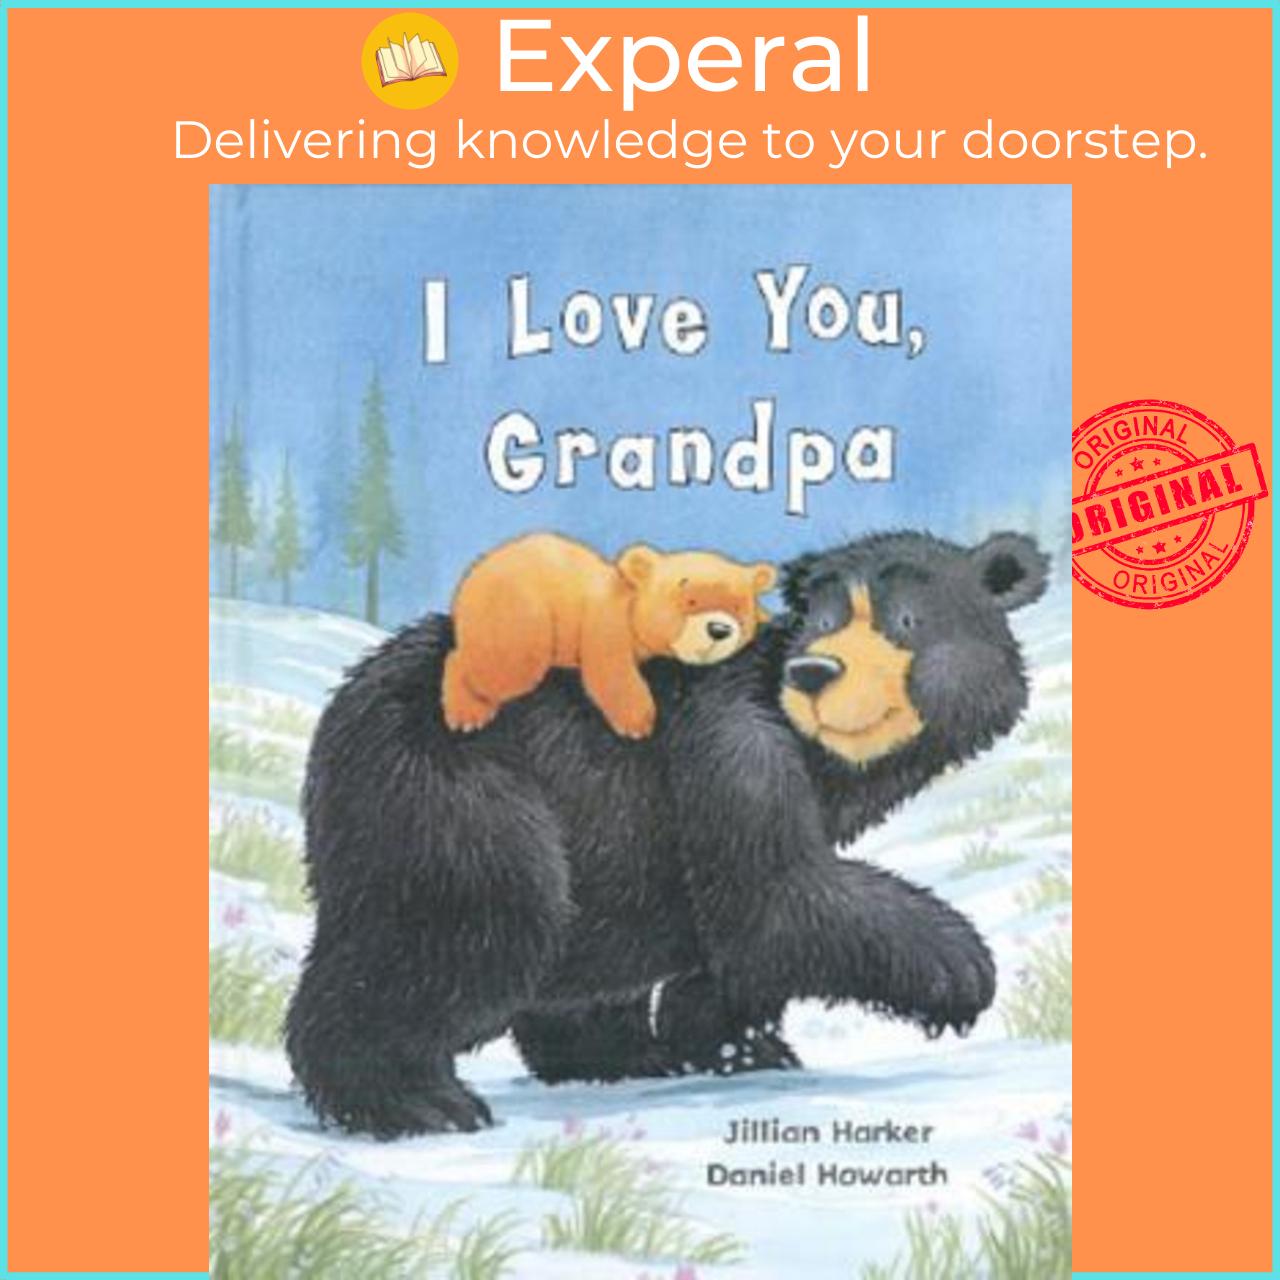 Sách - I Love You, Grandpa by Jillian Harker (US edition, hardcover)